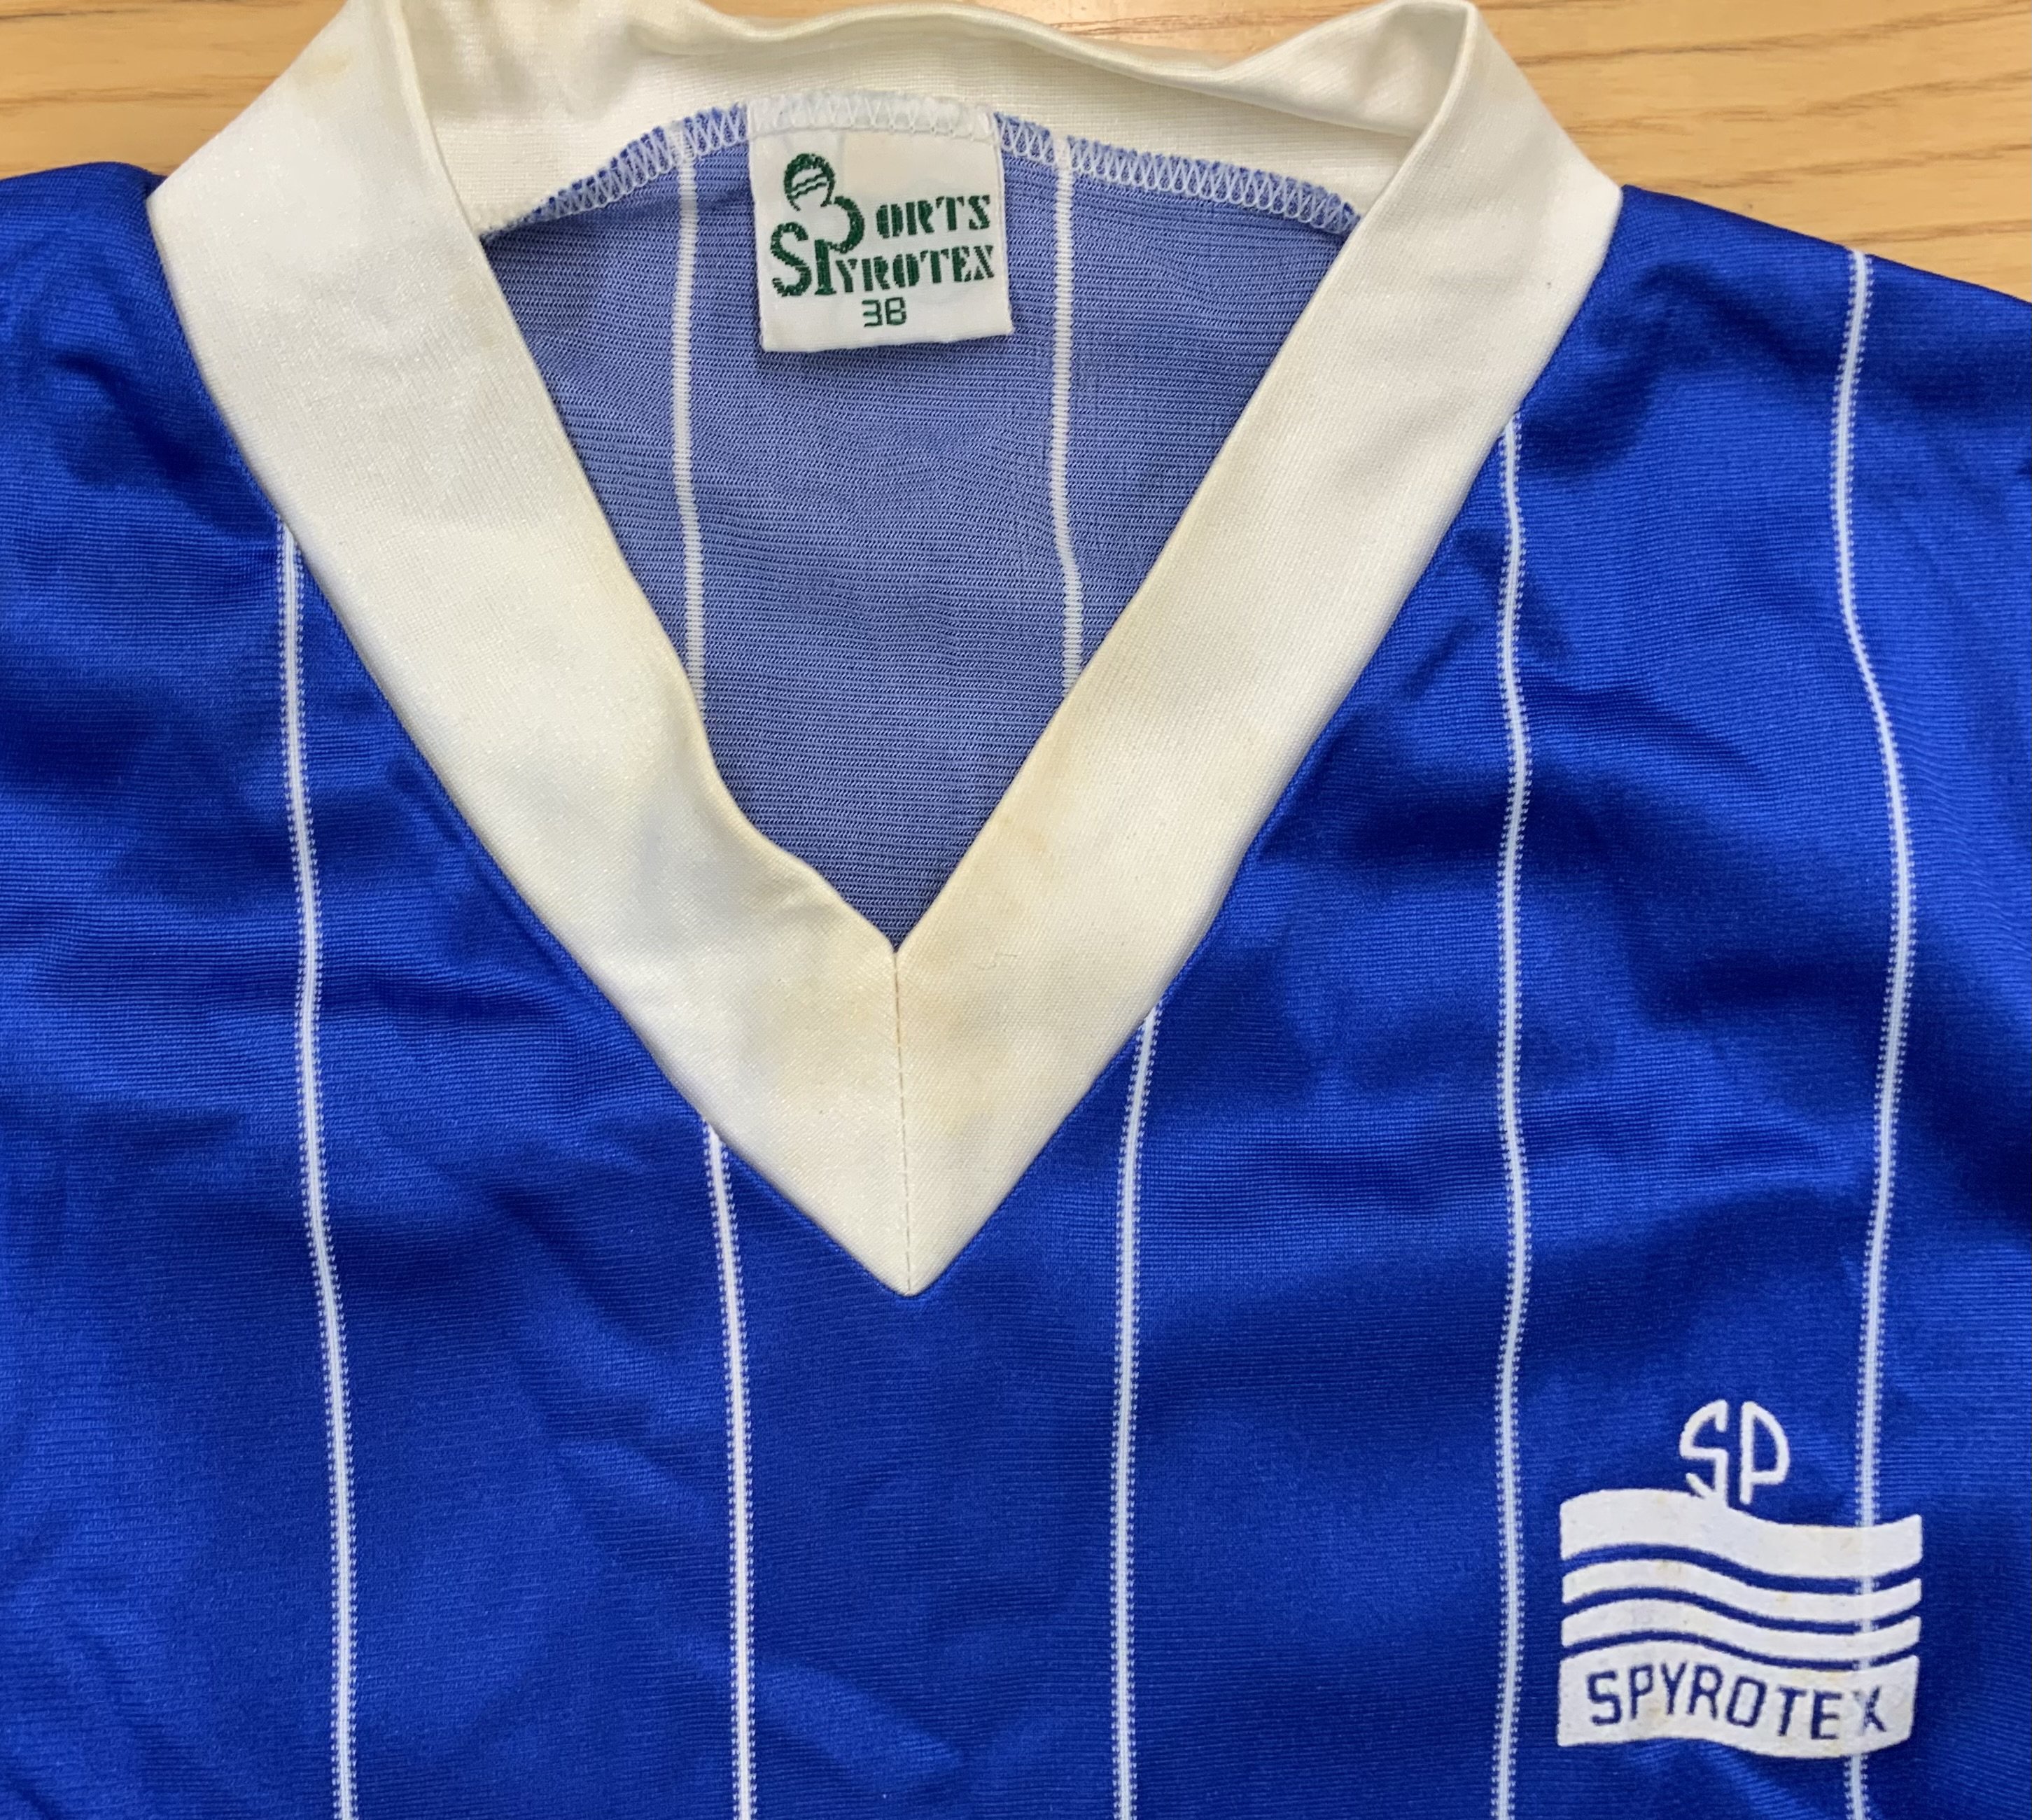 1982 Limassol Match Worn Football Shirt: Blue and - Image 3 of 3